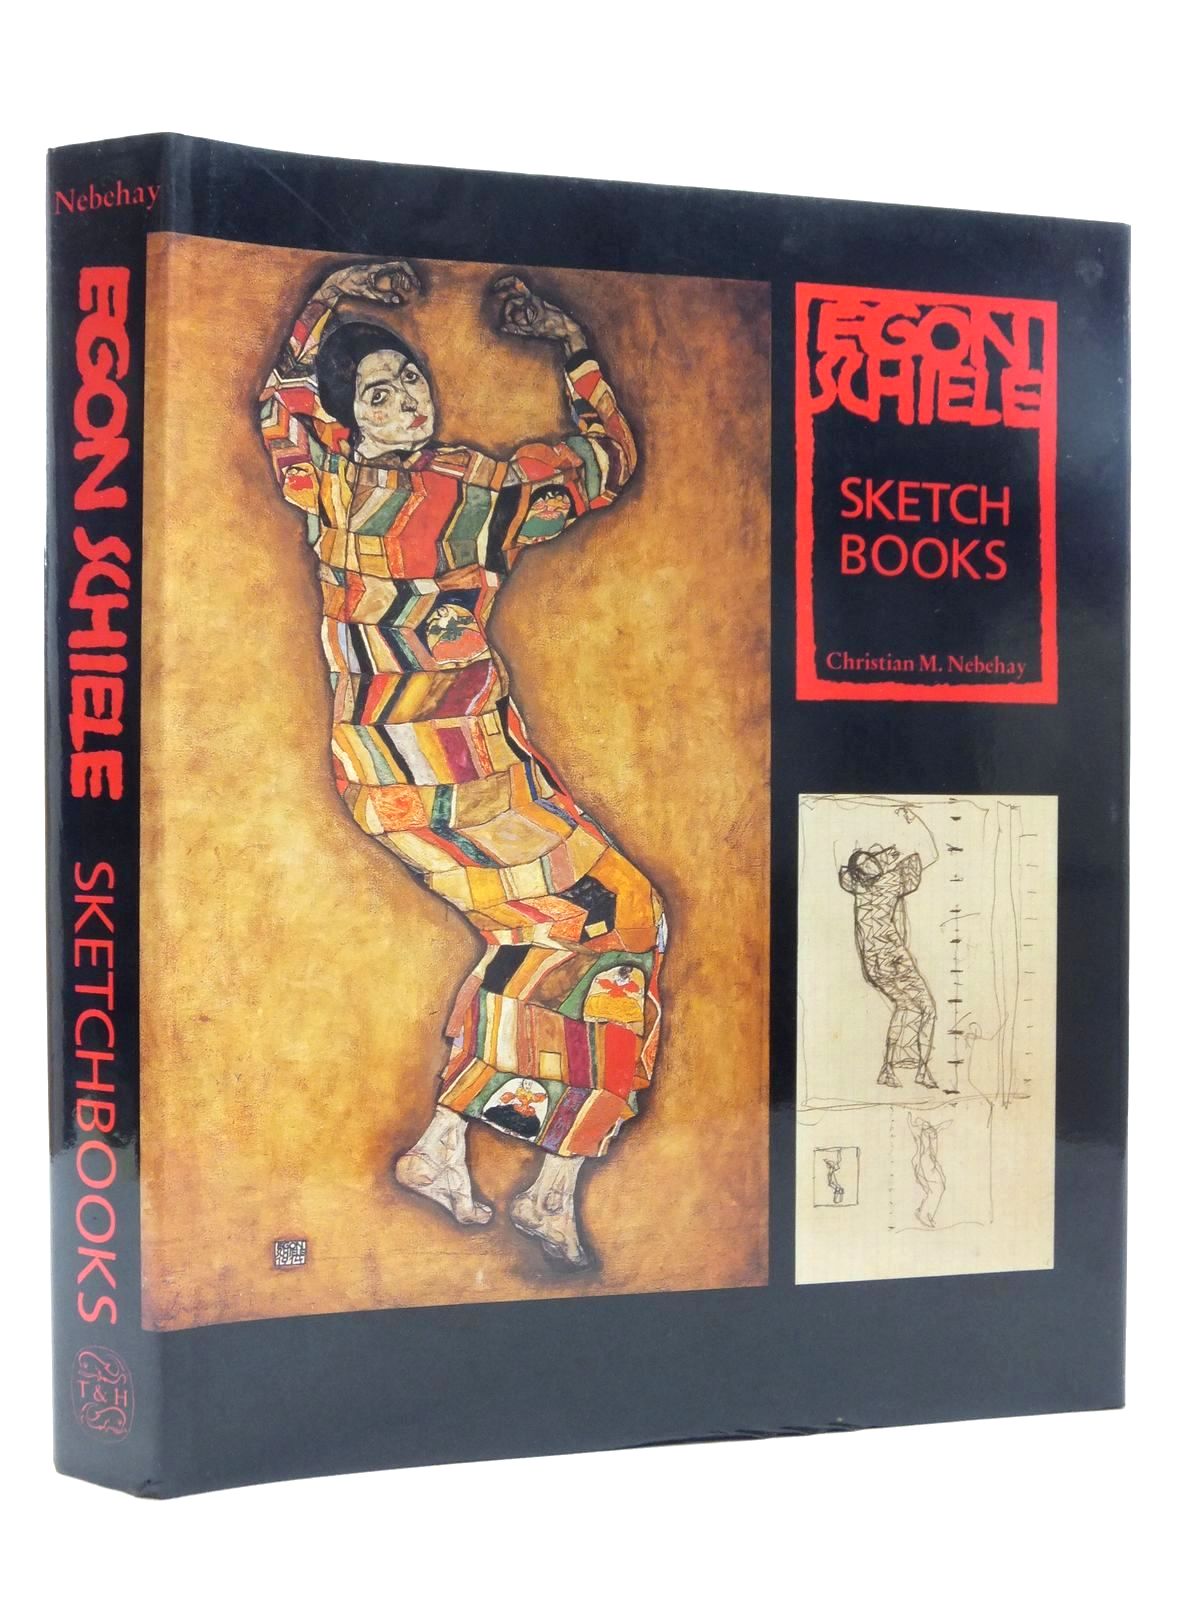 Egon Schiele: Sketch Books